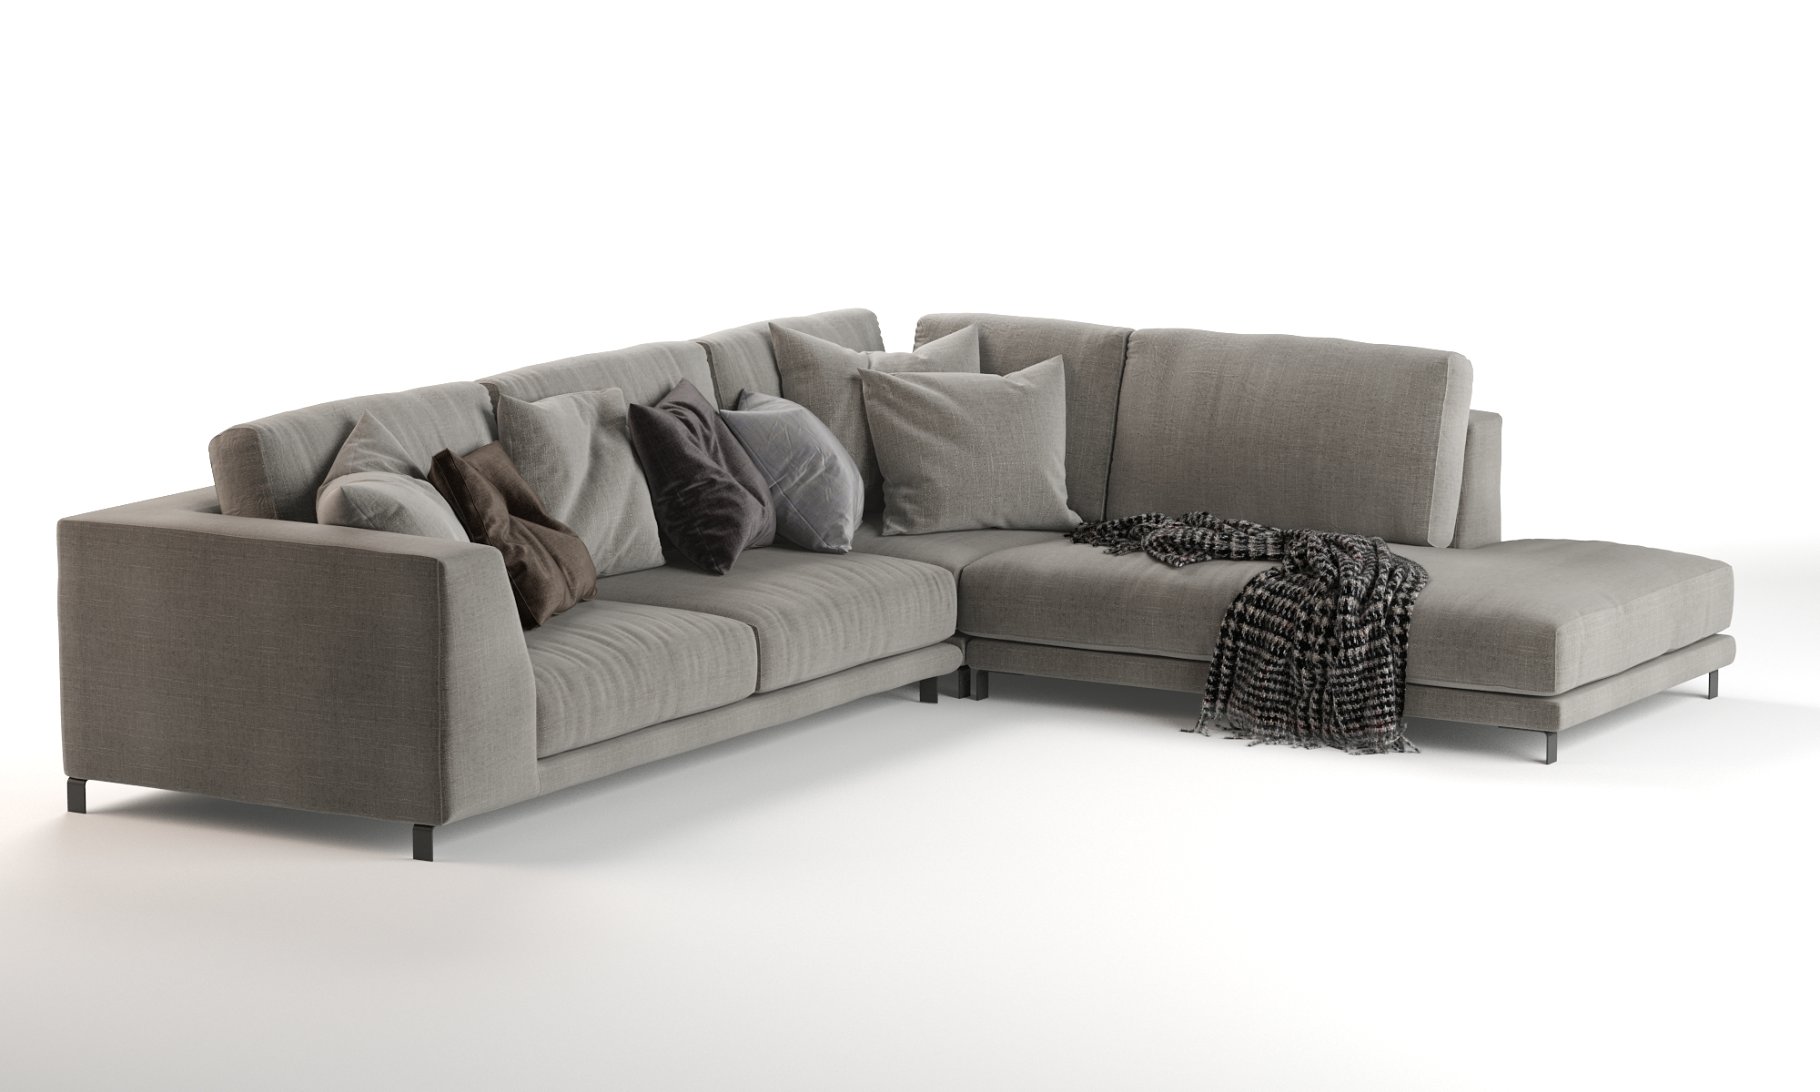 Rendering of a wonderful 3d model of a corner sofa